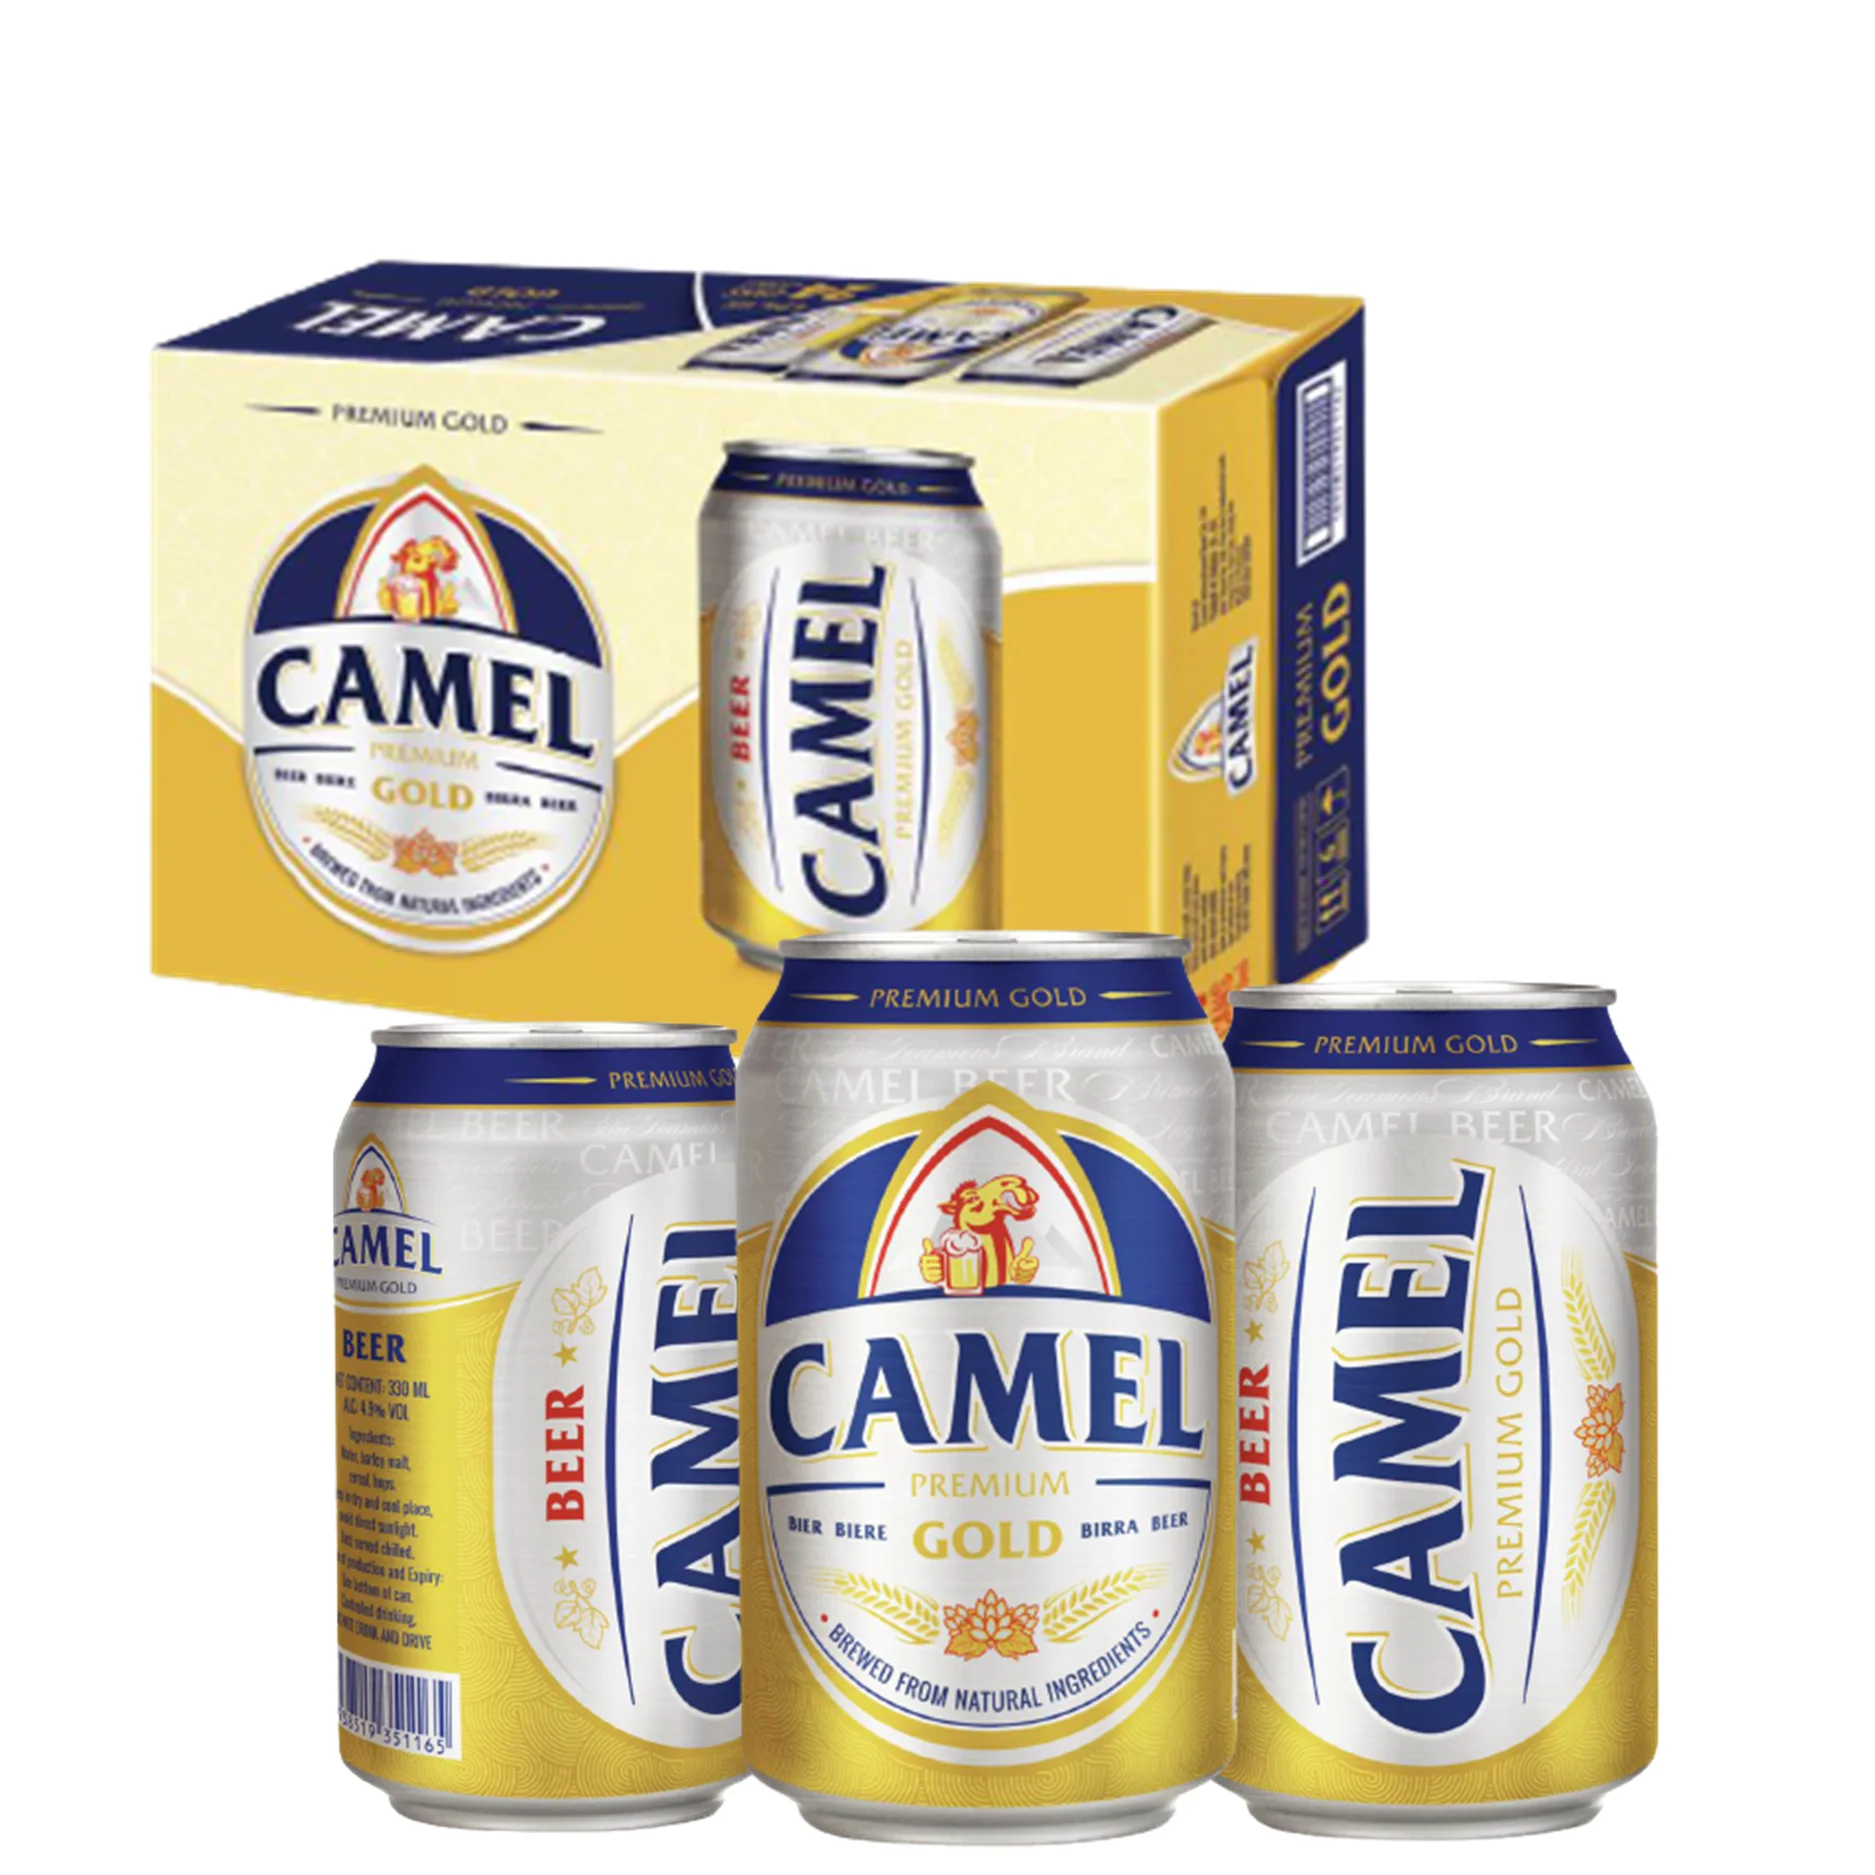 Camel beer